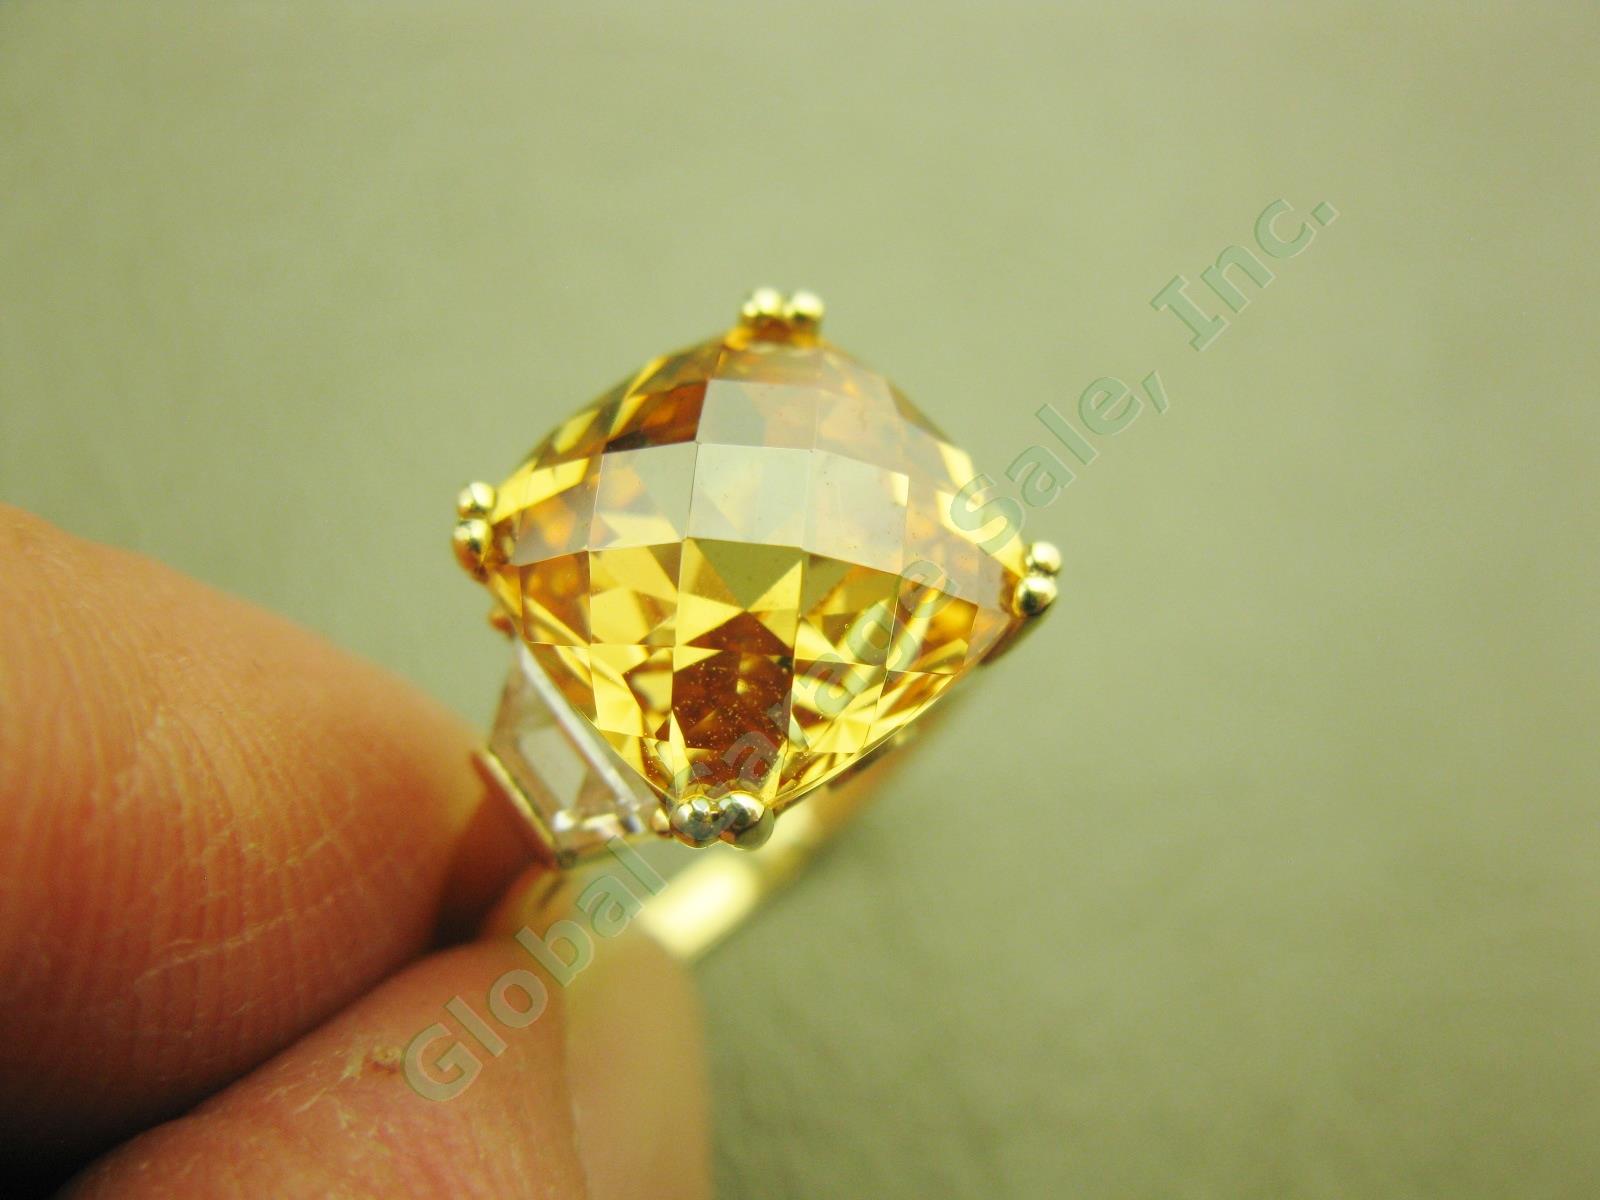 19x 14k 10k Gold Gemstone Rings Lot Earrings 57.7 Grams Not Scrap $1200+ Value!! 20